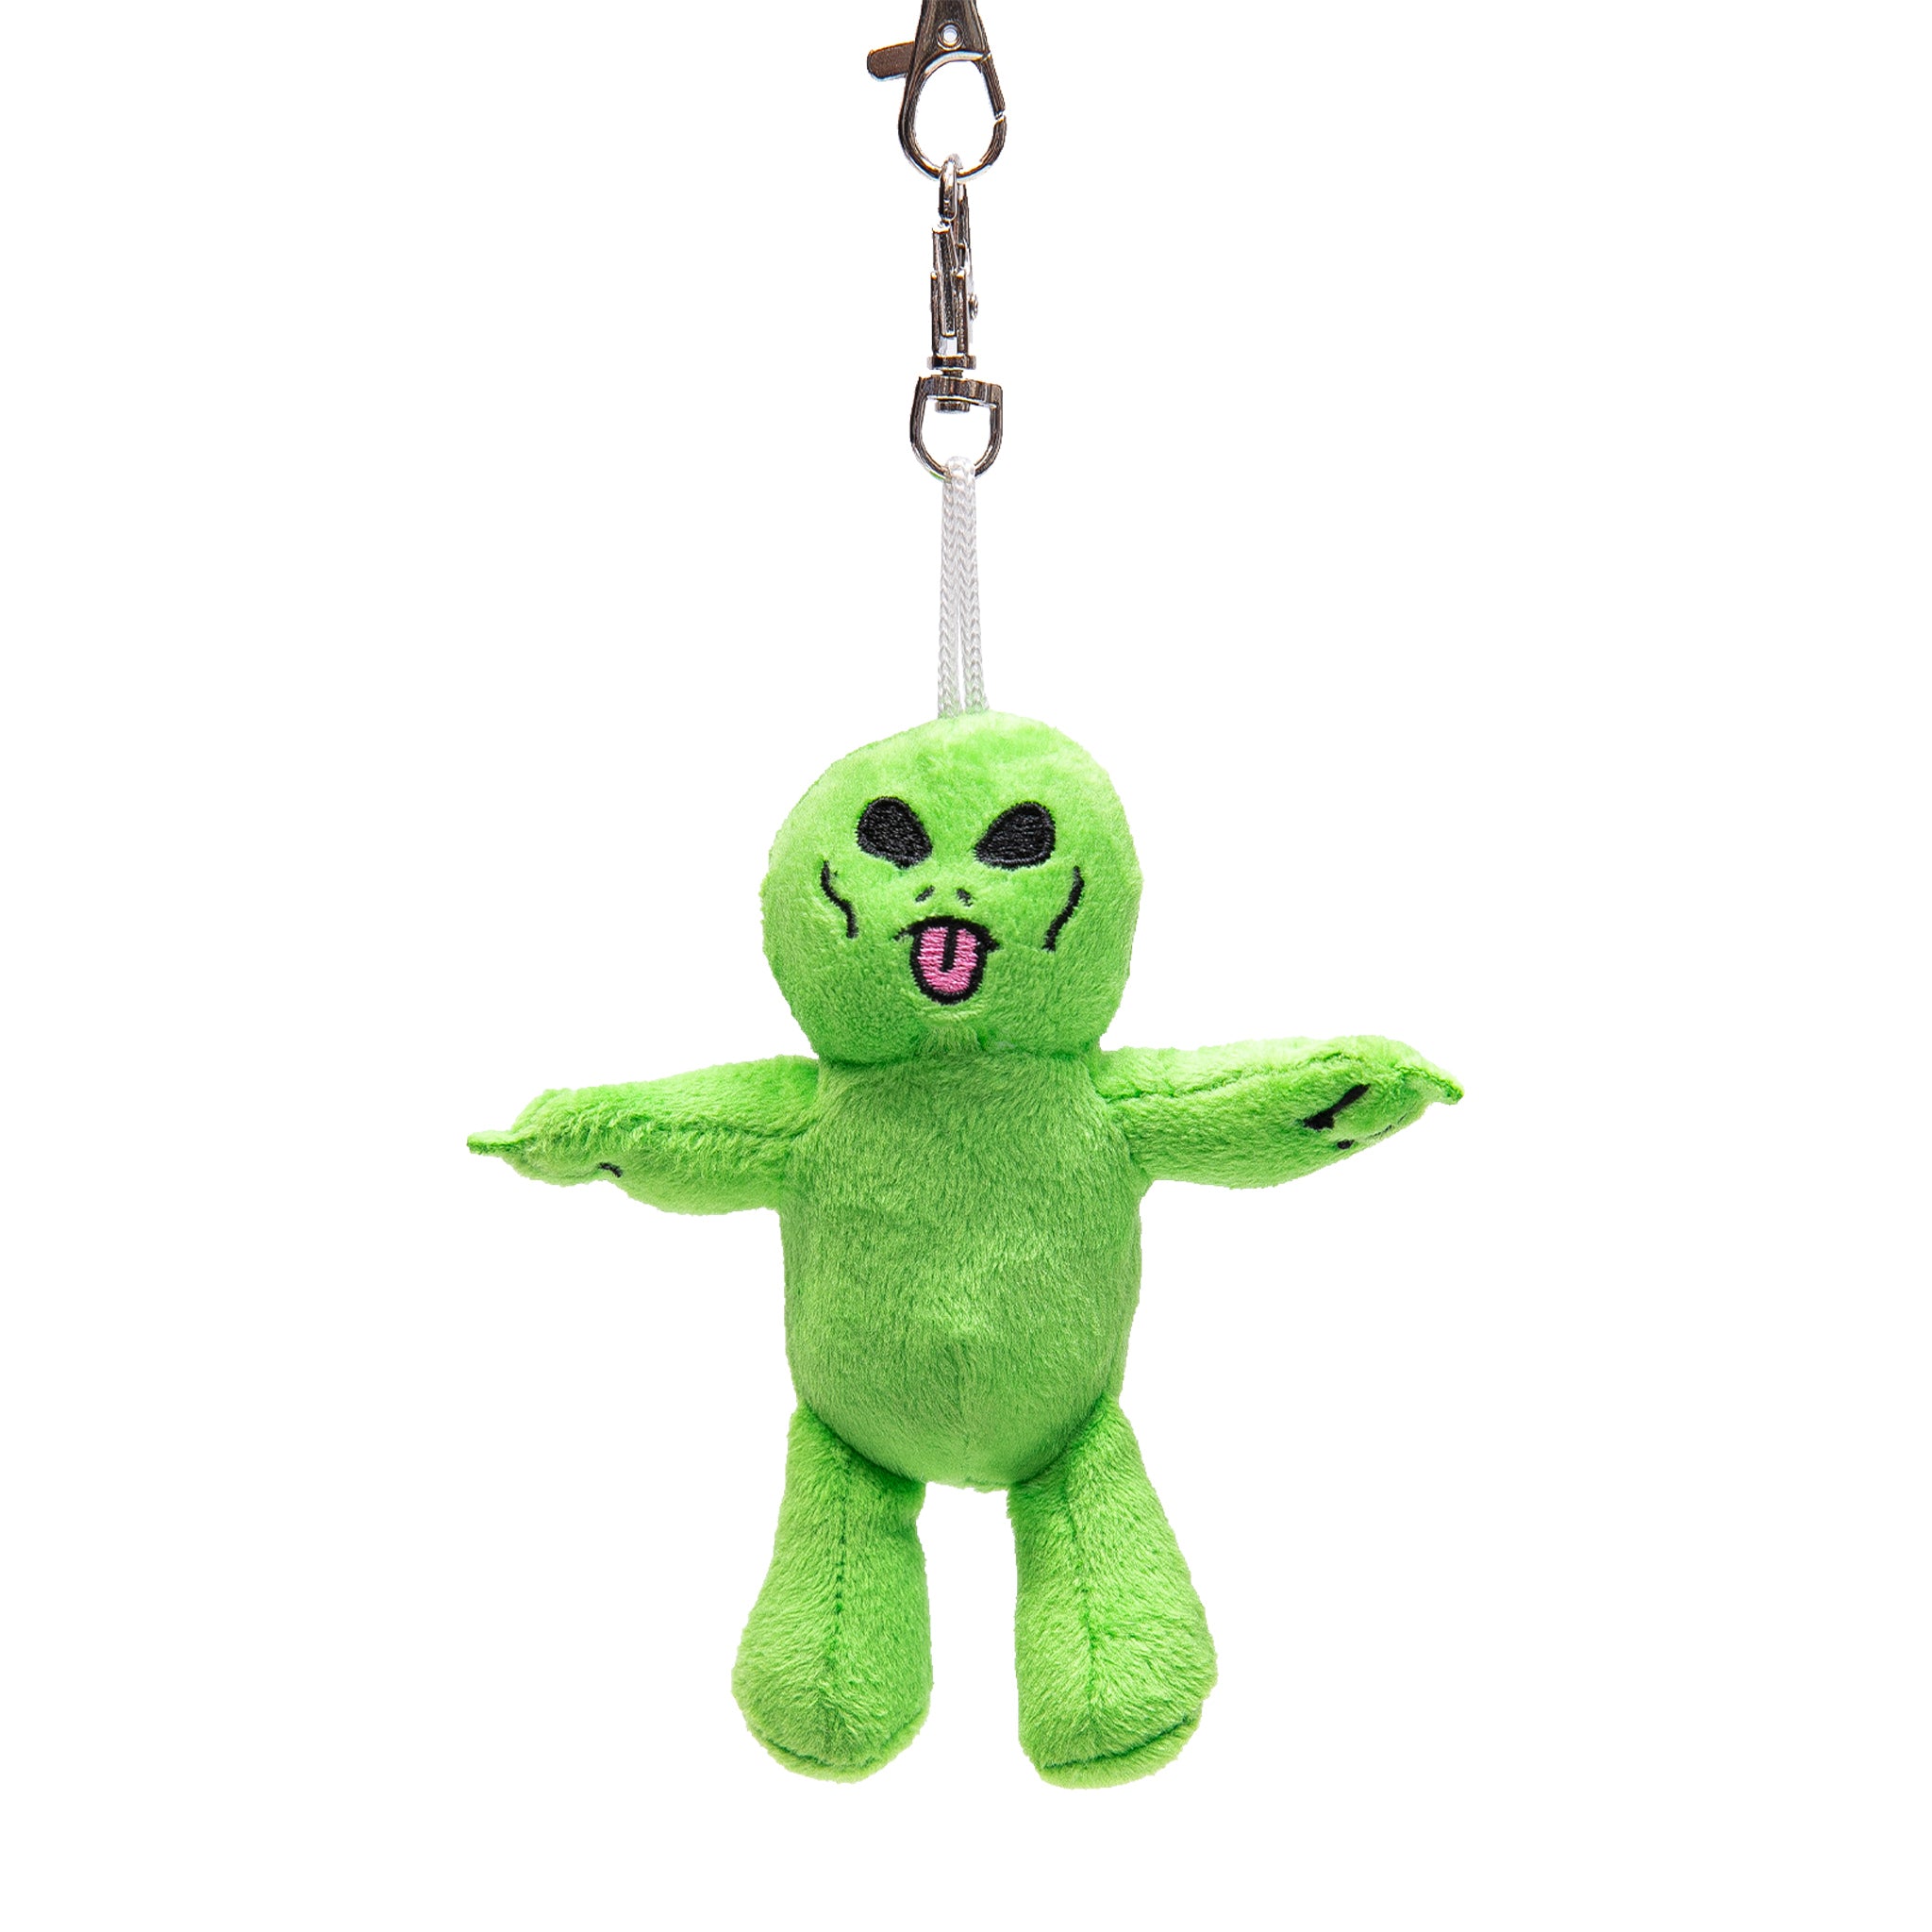 Lord Alien Plush Keychain (Green)